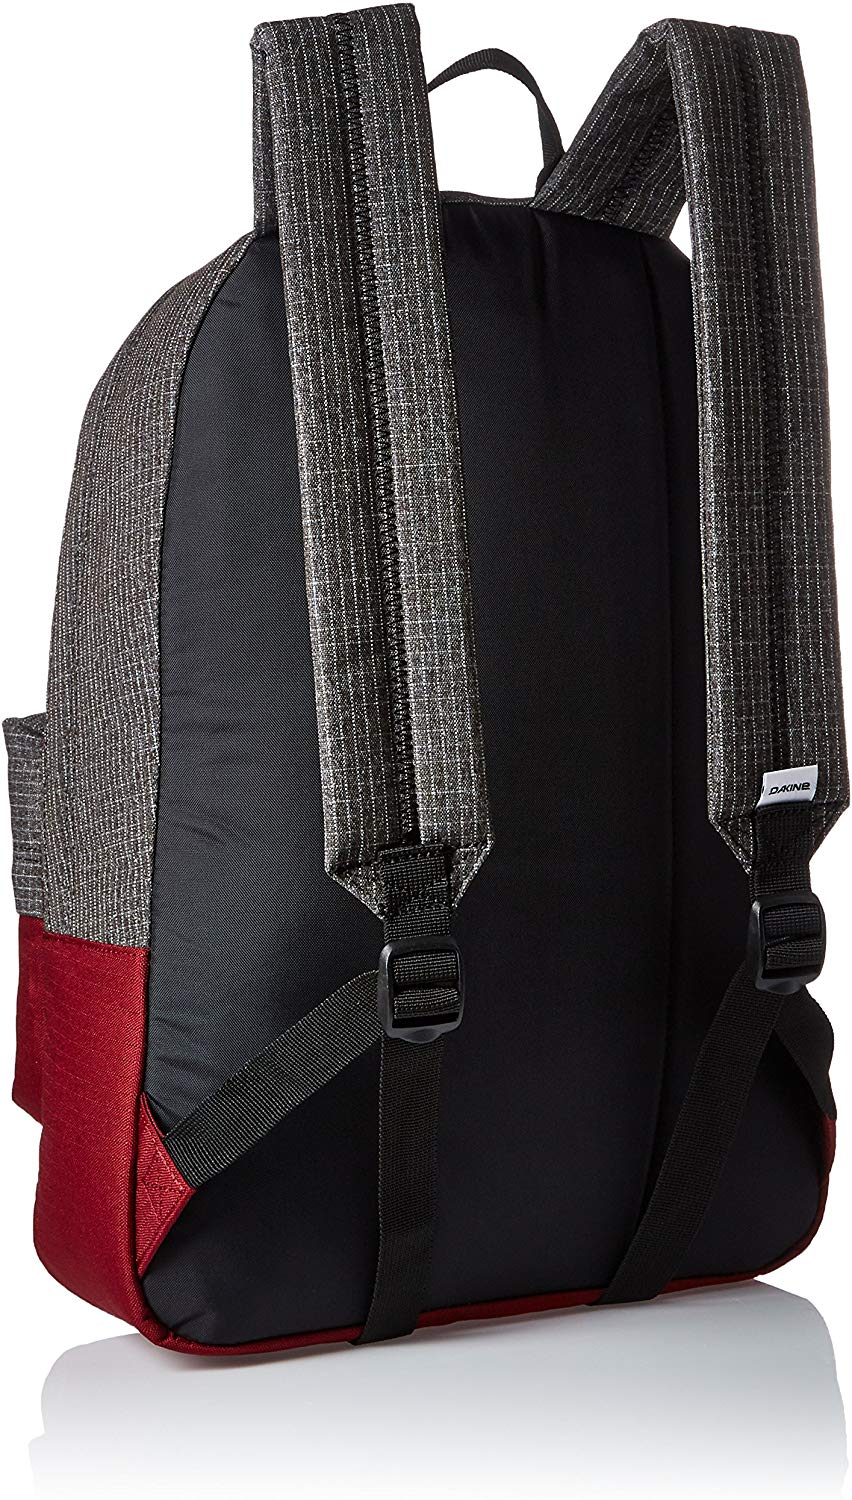 Dakine 365 Pack 21L Backpack (Willamette) - image 2 of 4